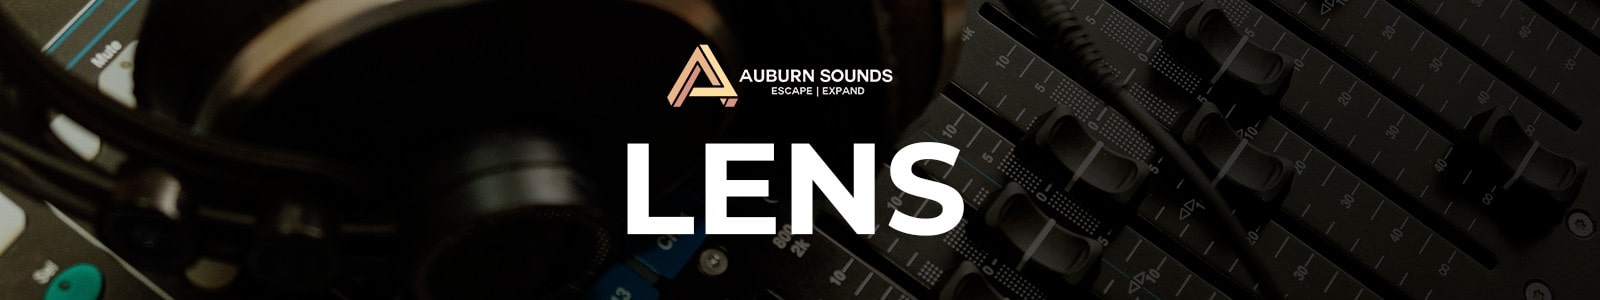 LENS by Auburn Sounds